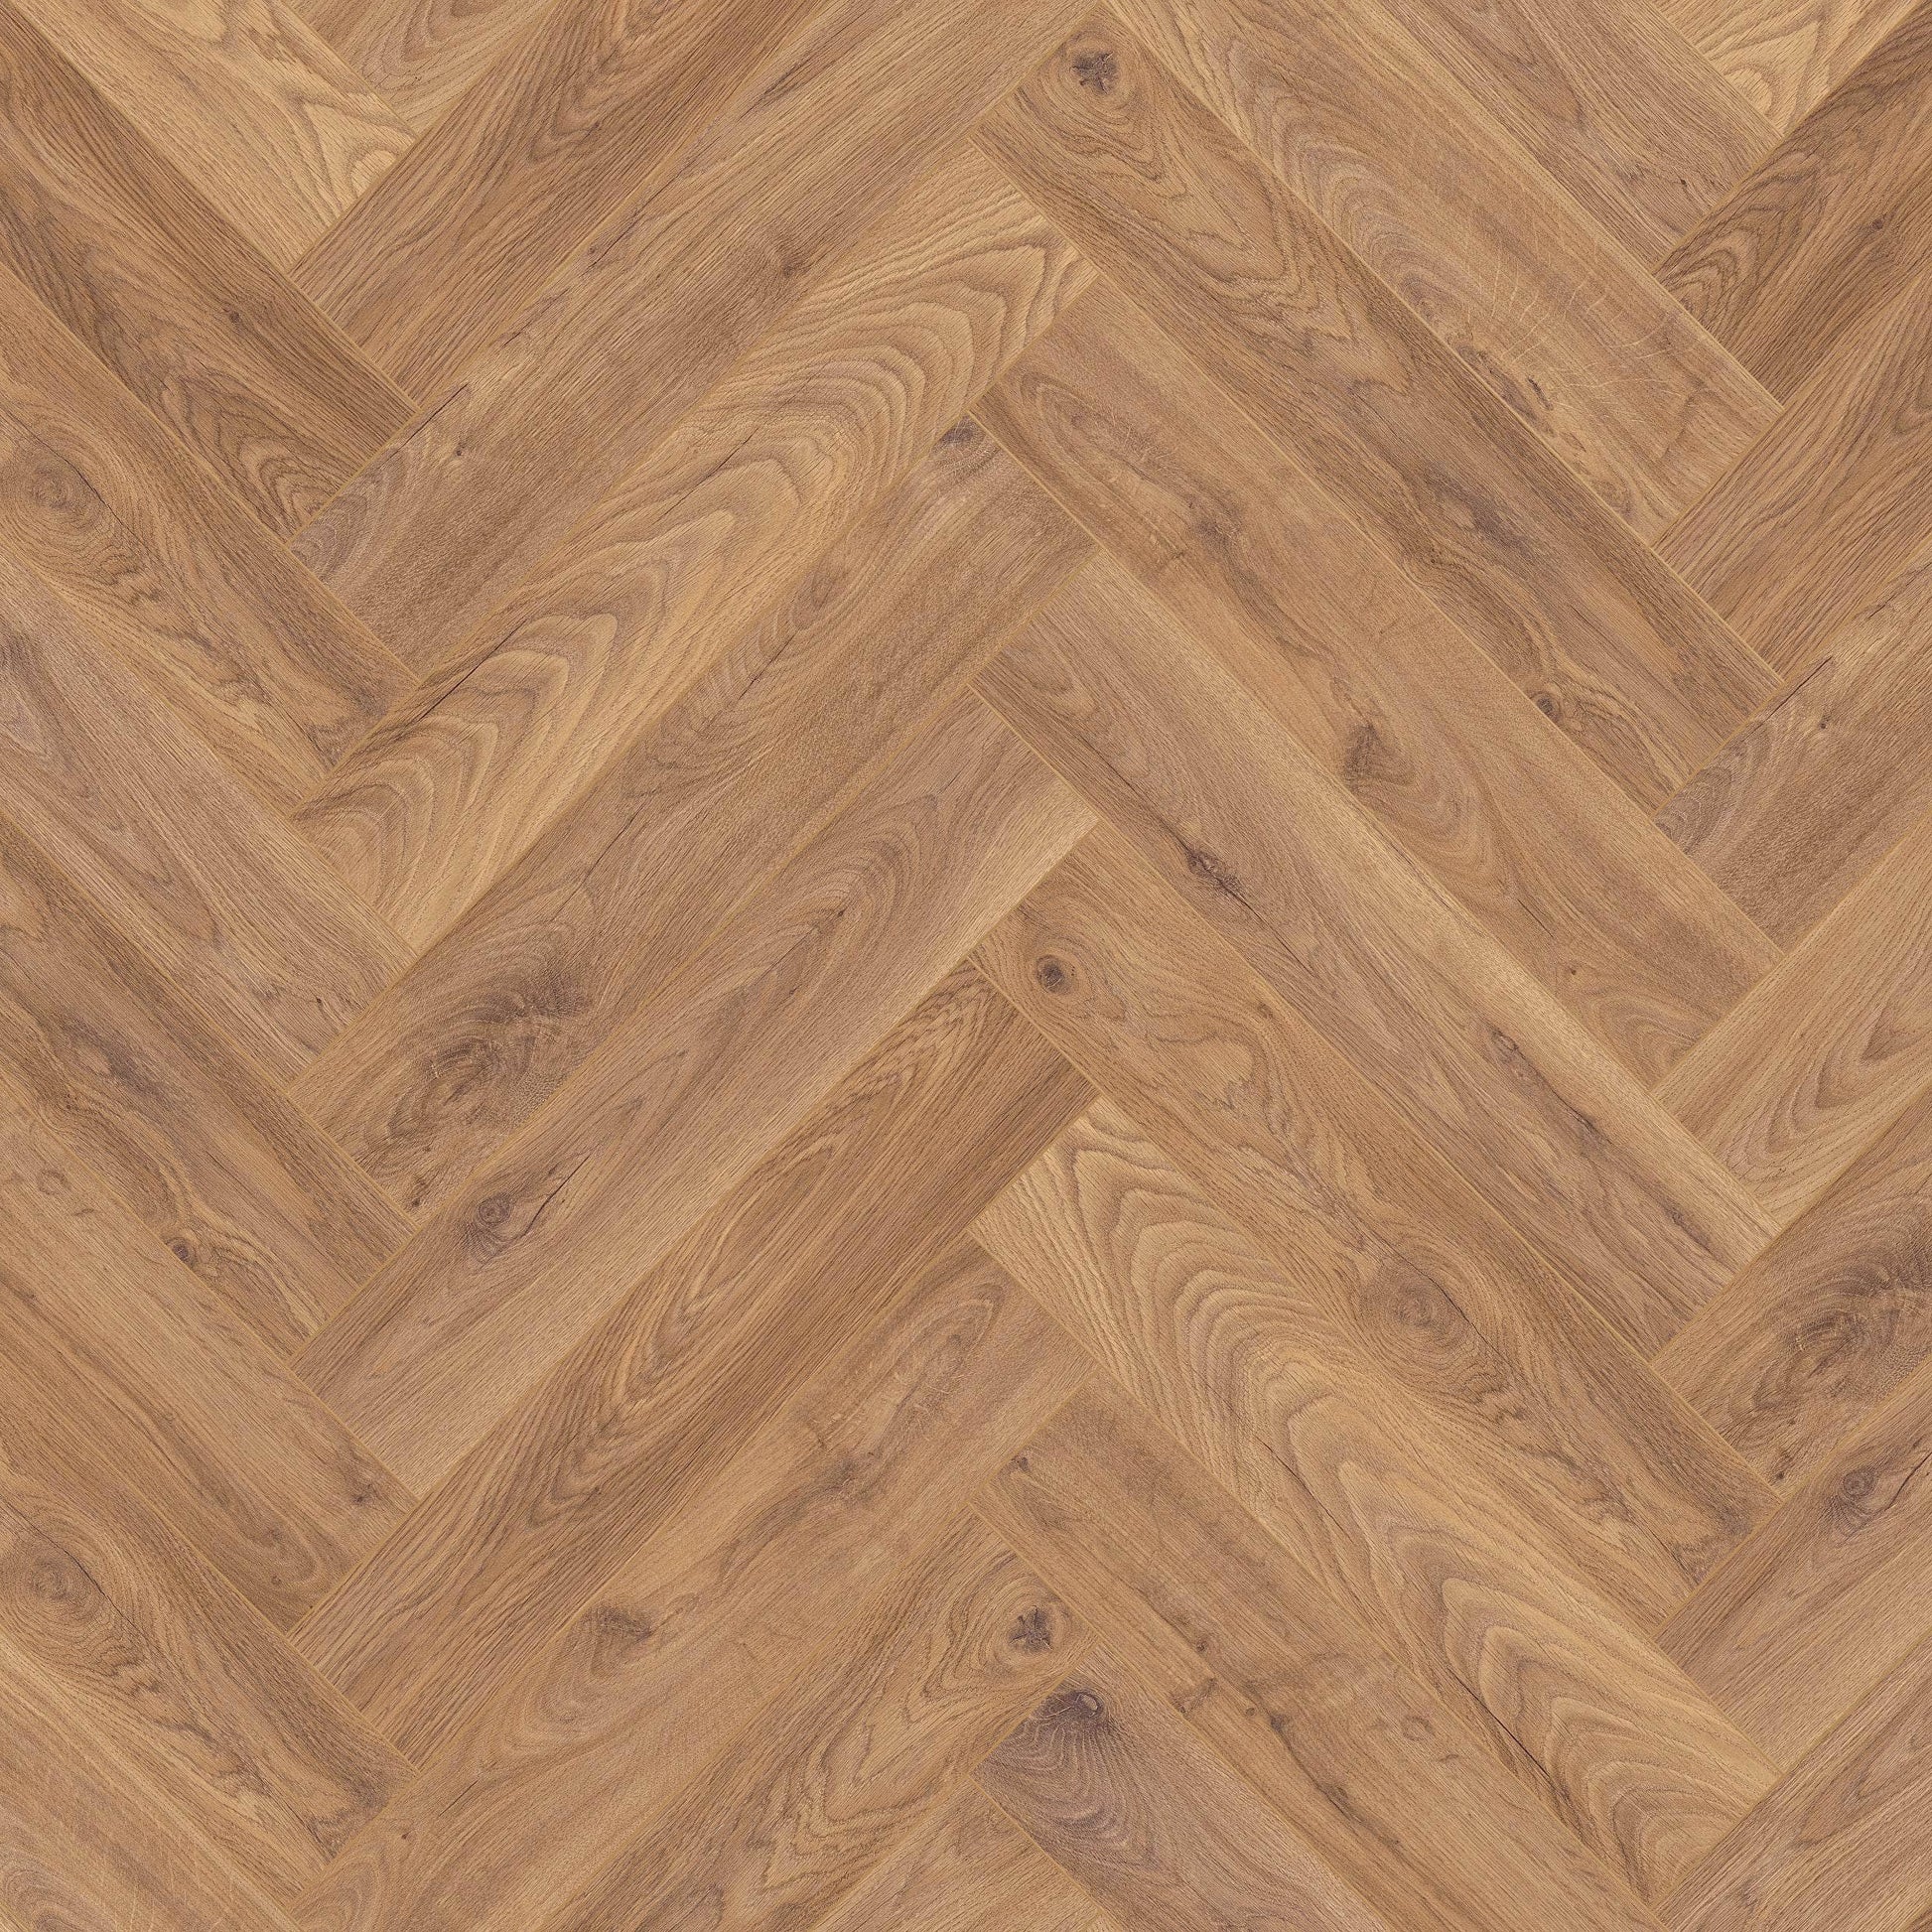 Flooring & Carpet  -  Krono Firebrand Oak Herringbone 8mm Laminate Flooring (0.87m² Pack)  -  60007172